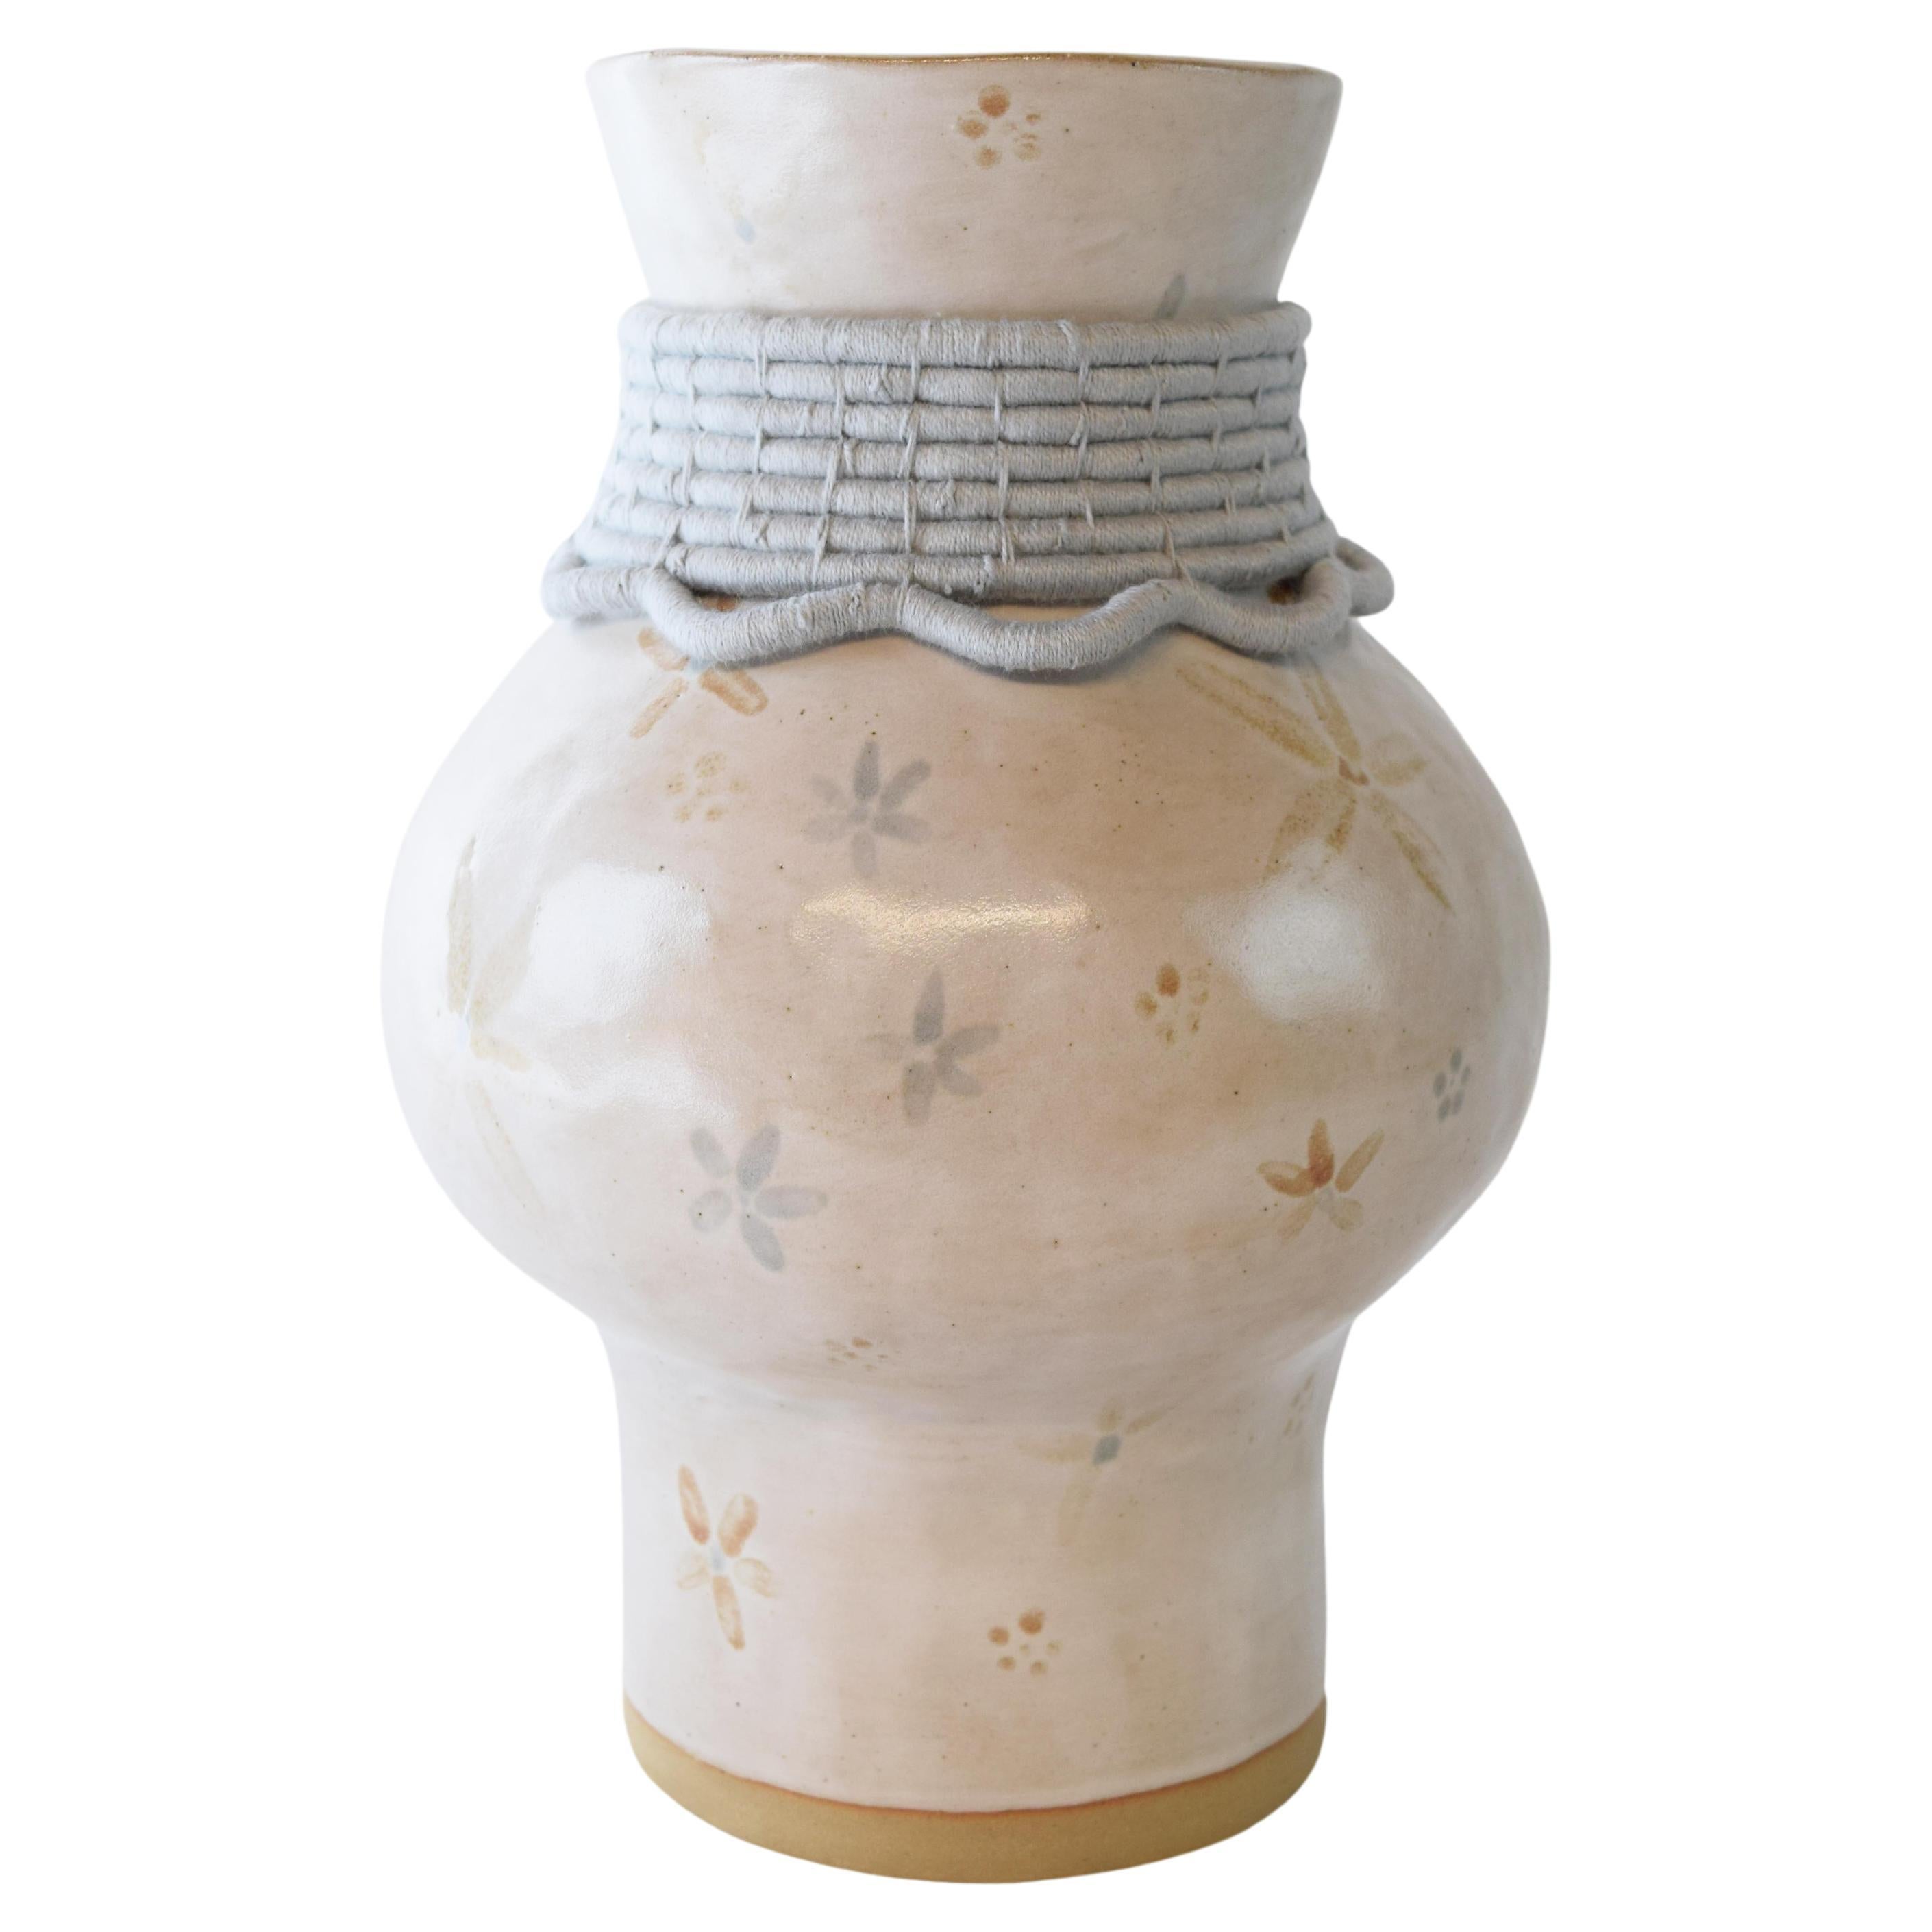 OOAK Handmade Ceramic Vase #791 - Hand Glazed Floral & Light Blue Cotton Detail